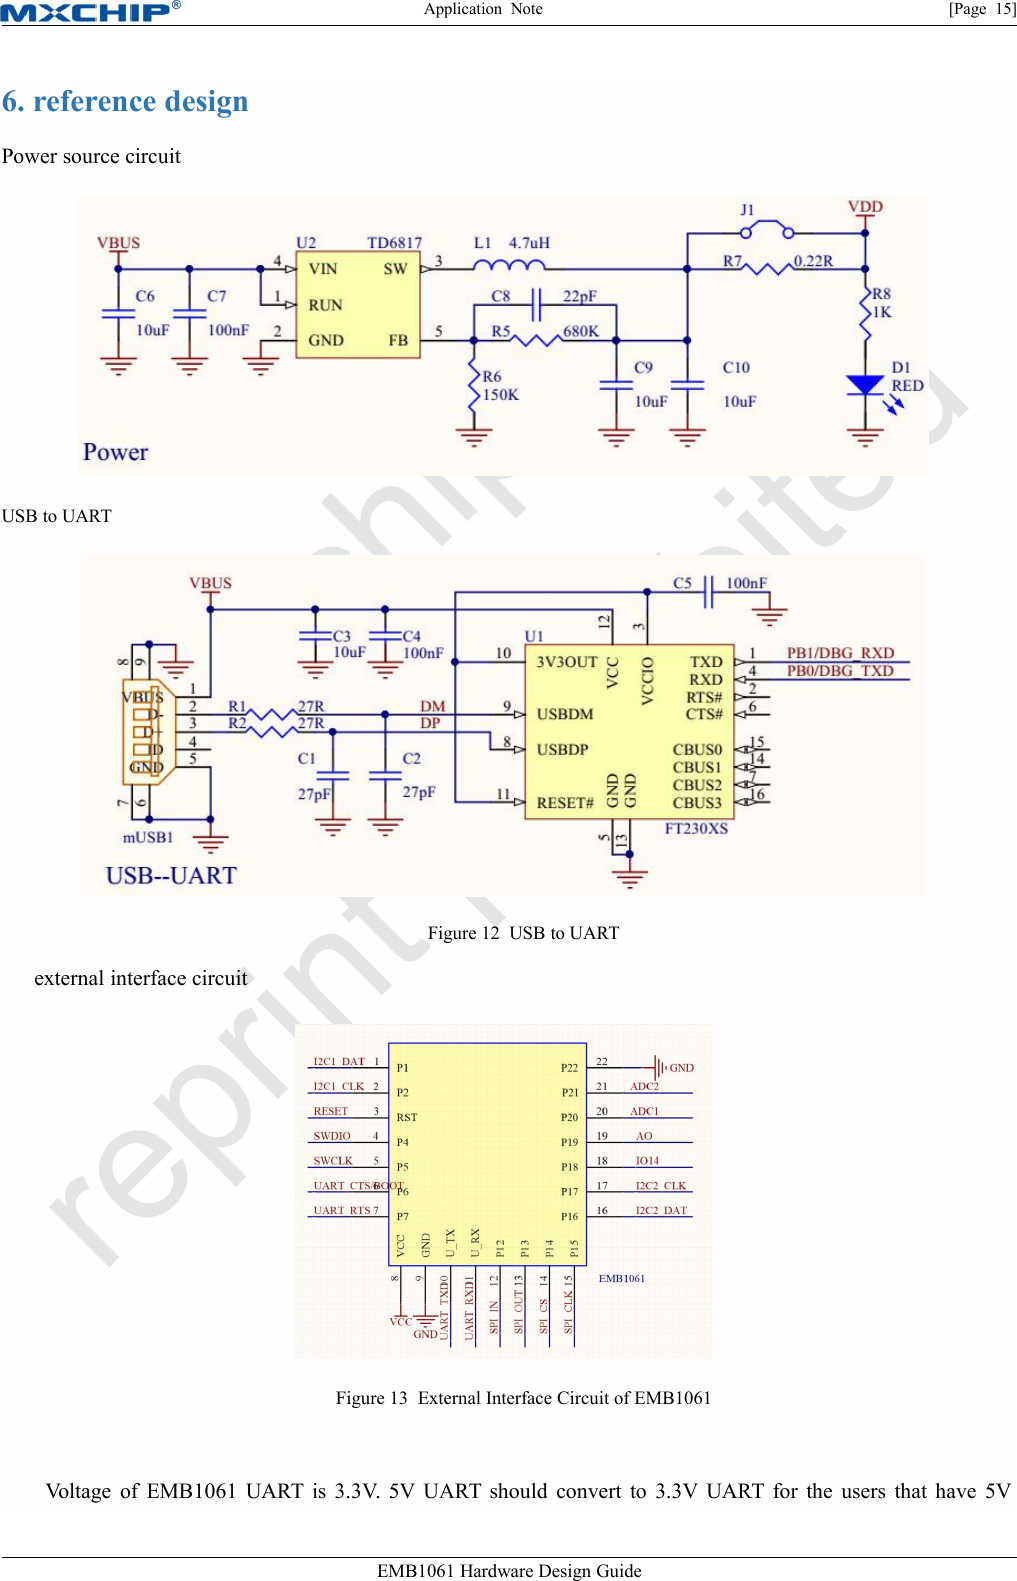 Application Note [Page 15]EMB1061 Hardware Design Guide6. reference designPower source circuitUSB to UARTFigure 12 USB to UARTexternal interface circuitFigure 13 External Interface Circuit of EMB1061Voltage of EMB1061 UART is 3.3V. 5V UART should convert to 3.3V UART for the users that have 5V